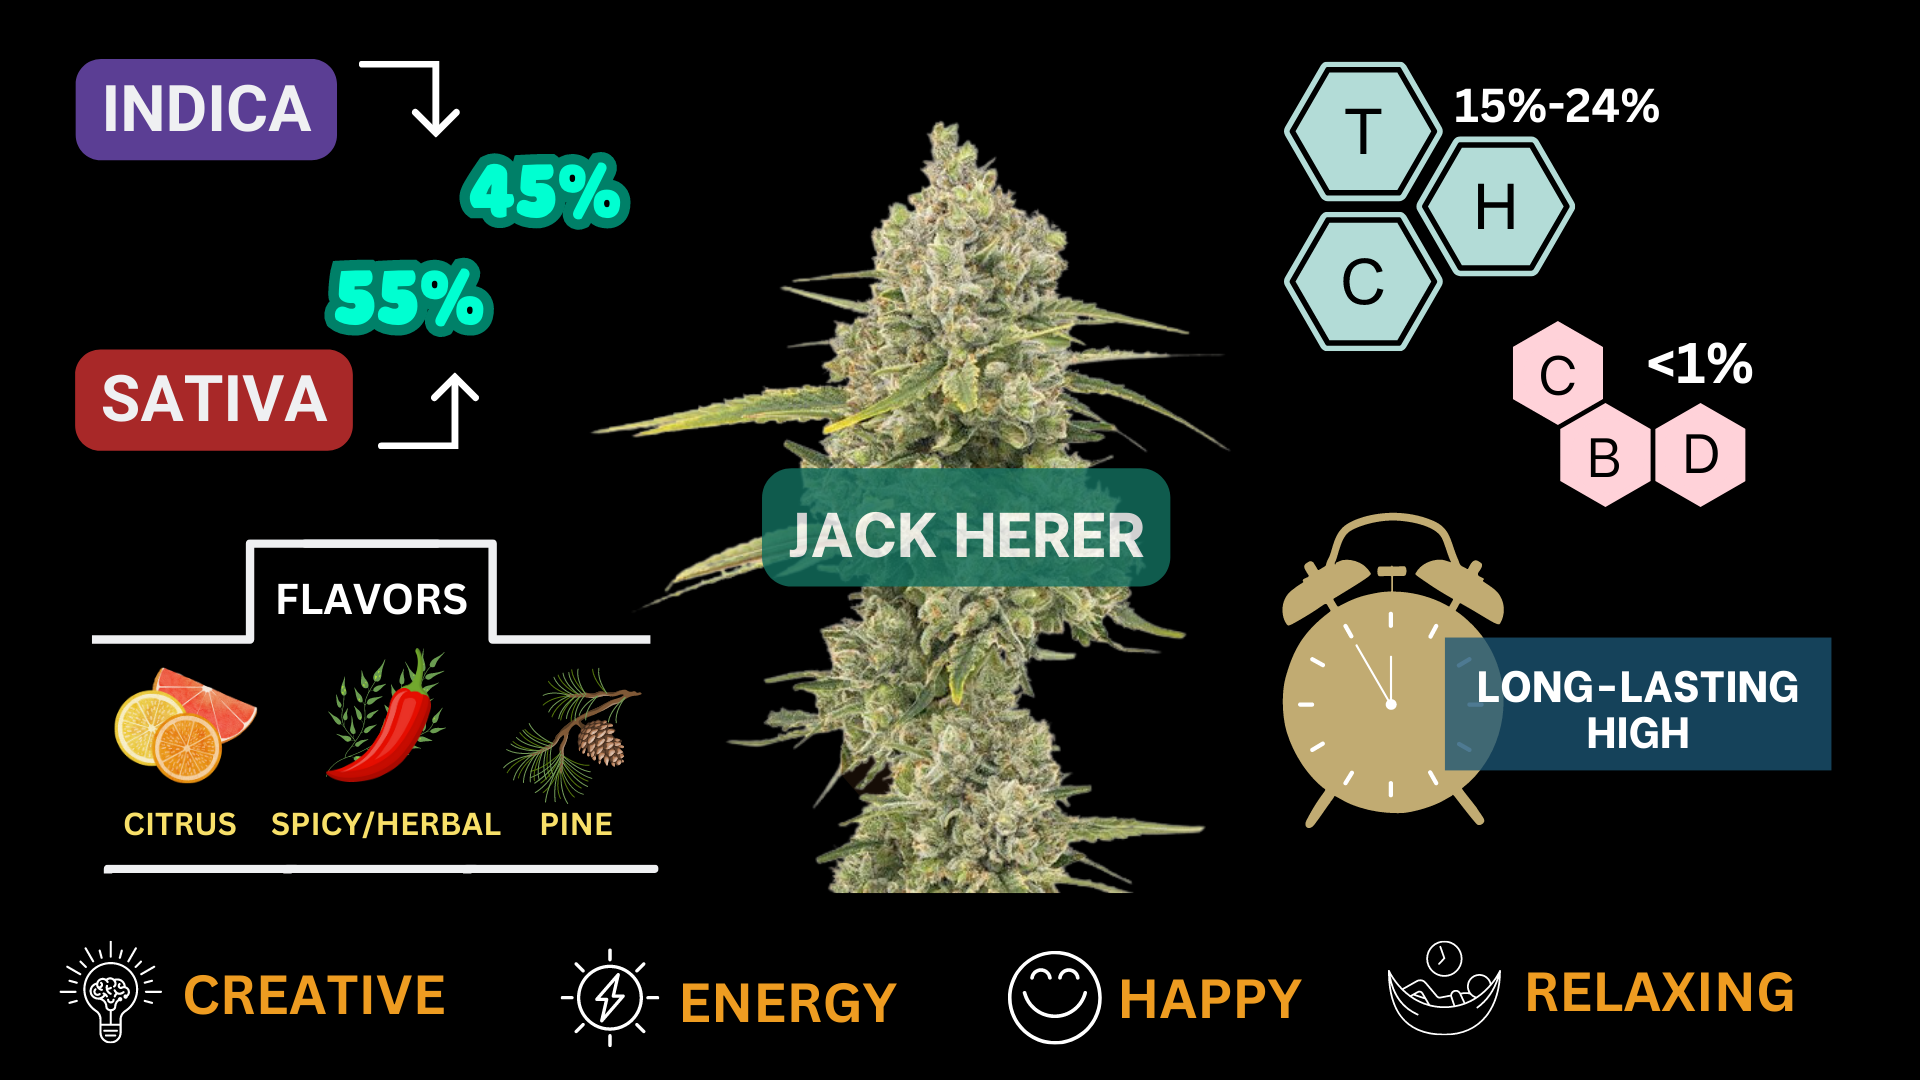 jack herer visual infographic with close up of marijuana plant jack herer strain